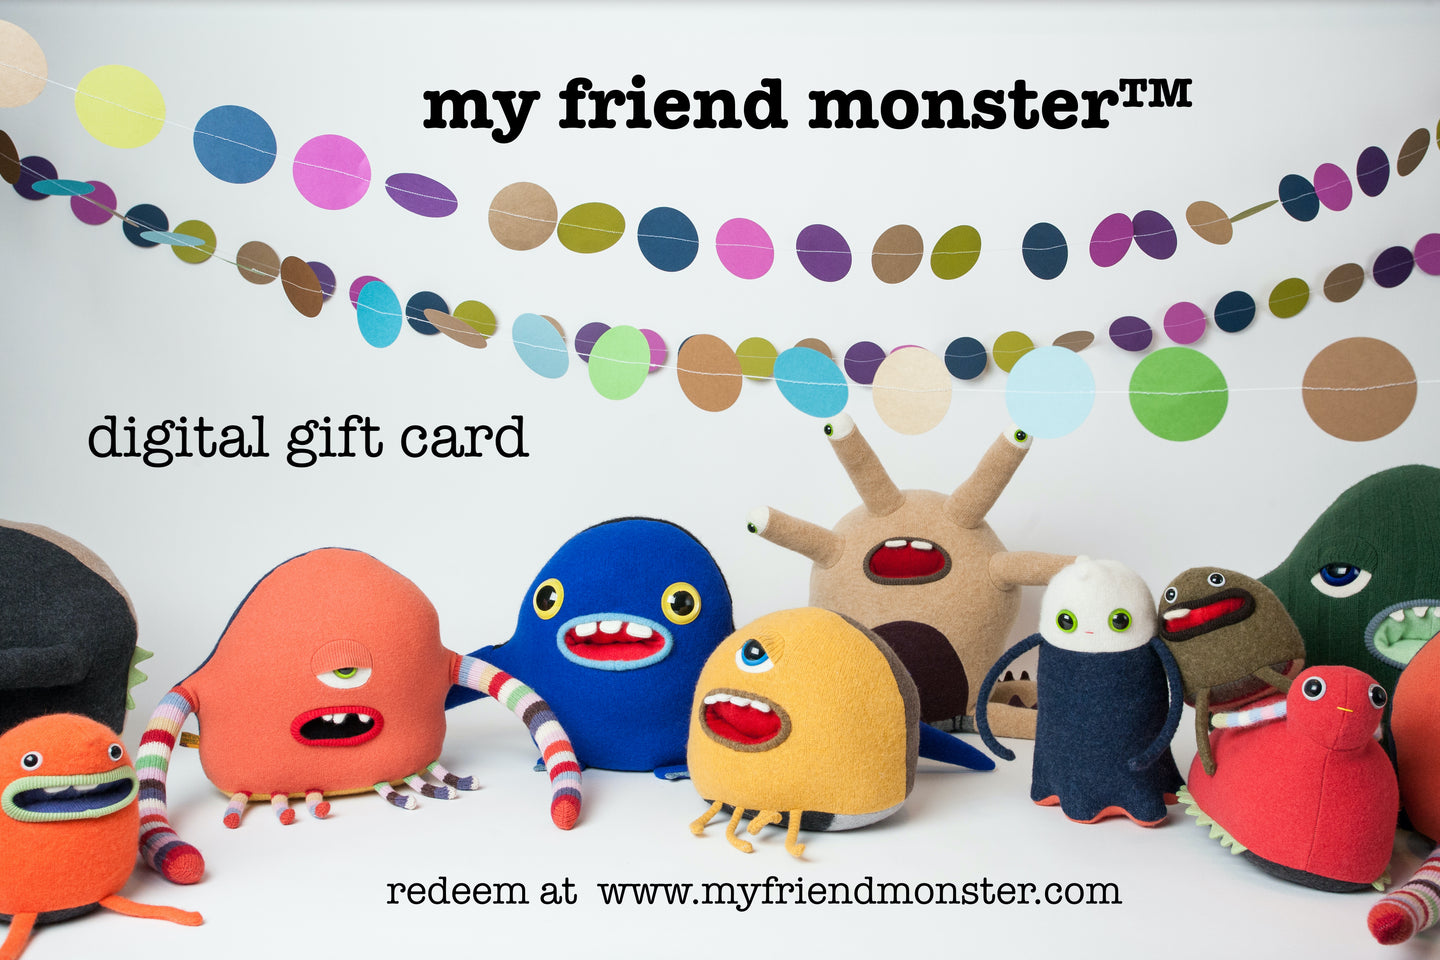 my friend monster™ digital gift card